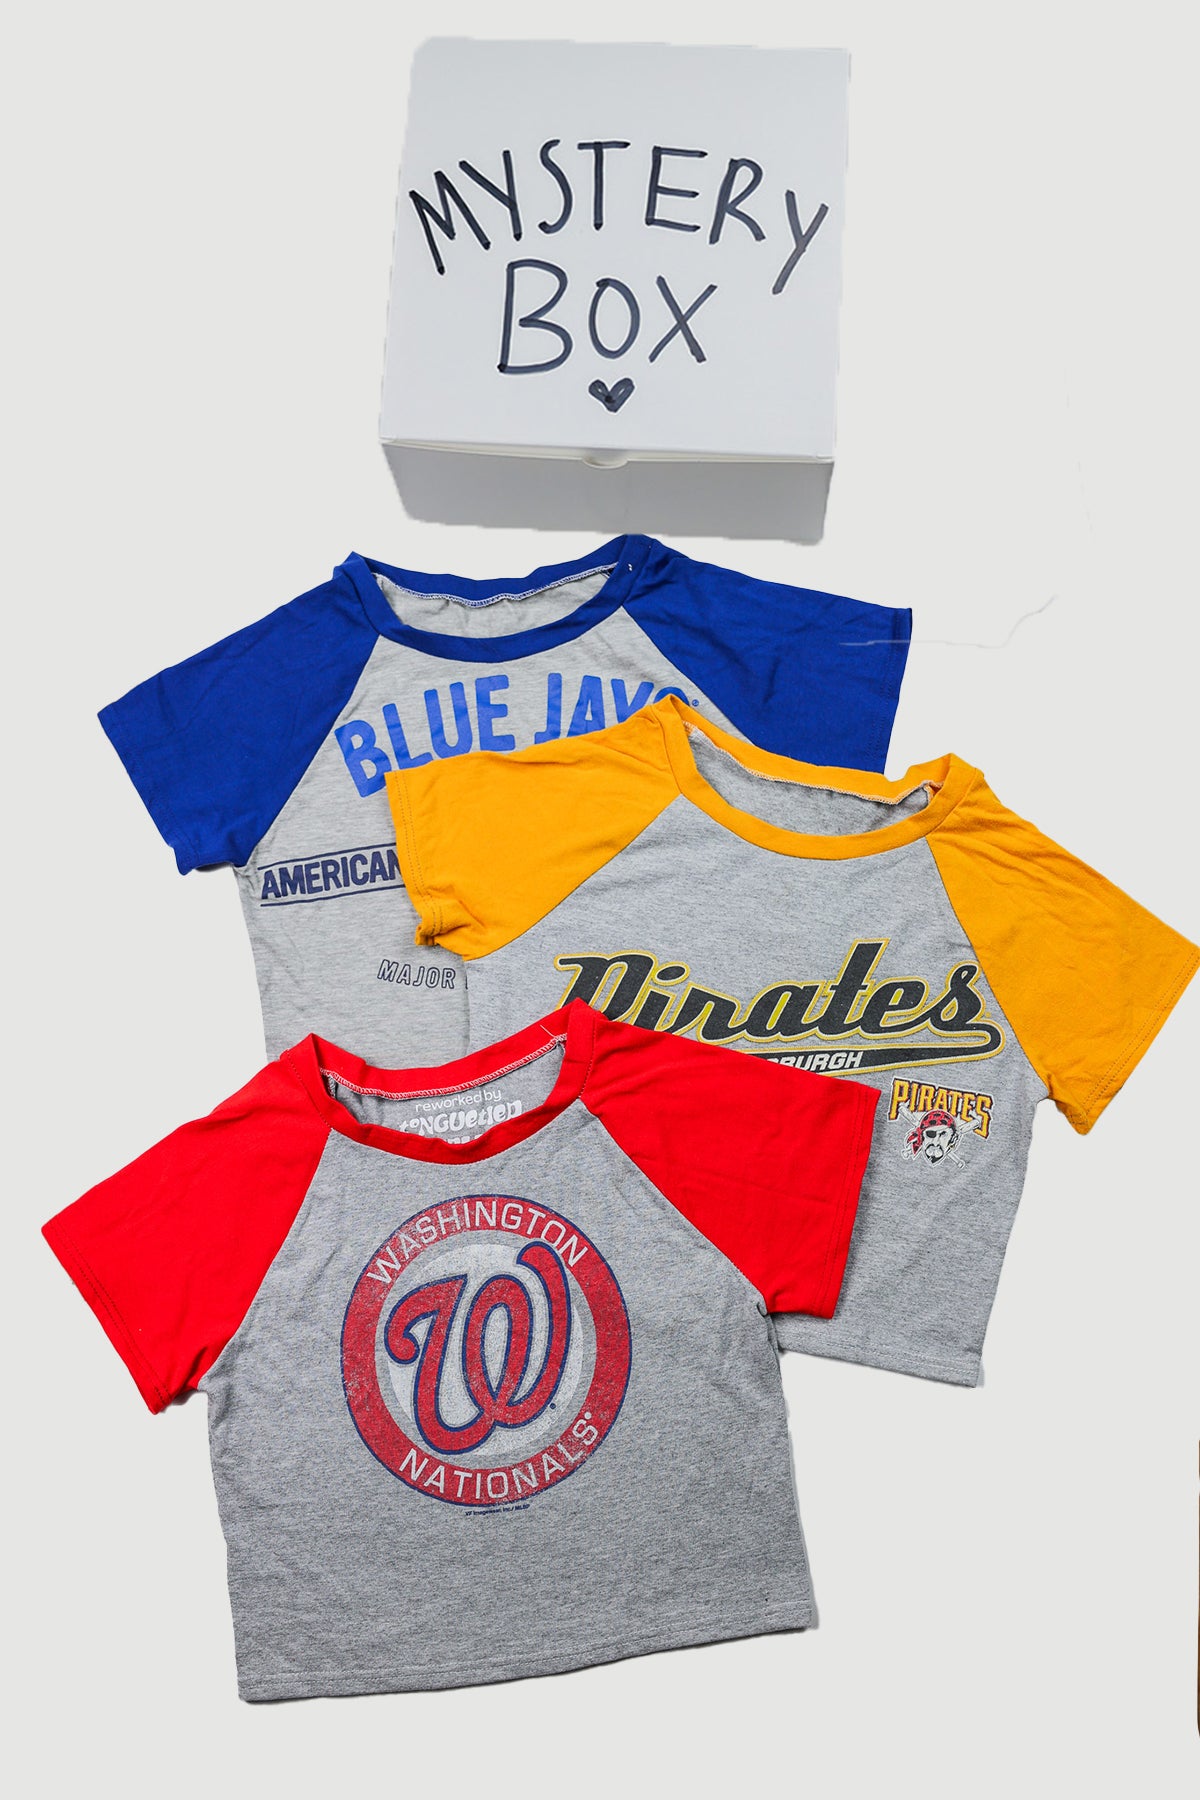 MLB Baby Tee Mystery Box